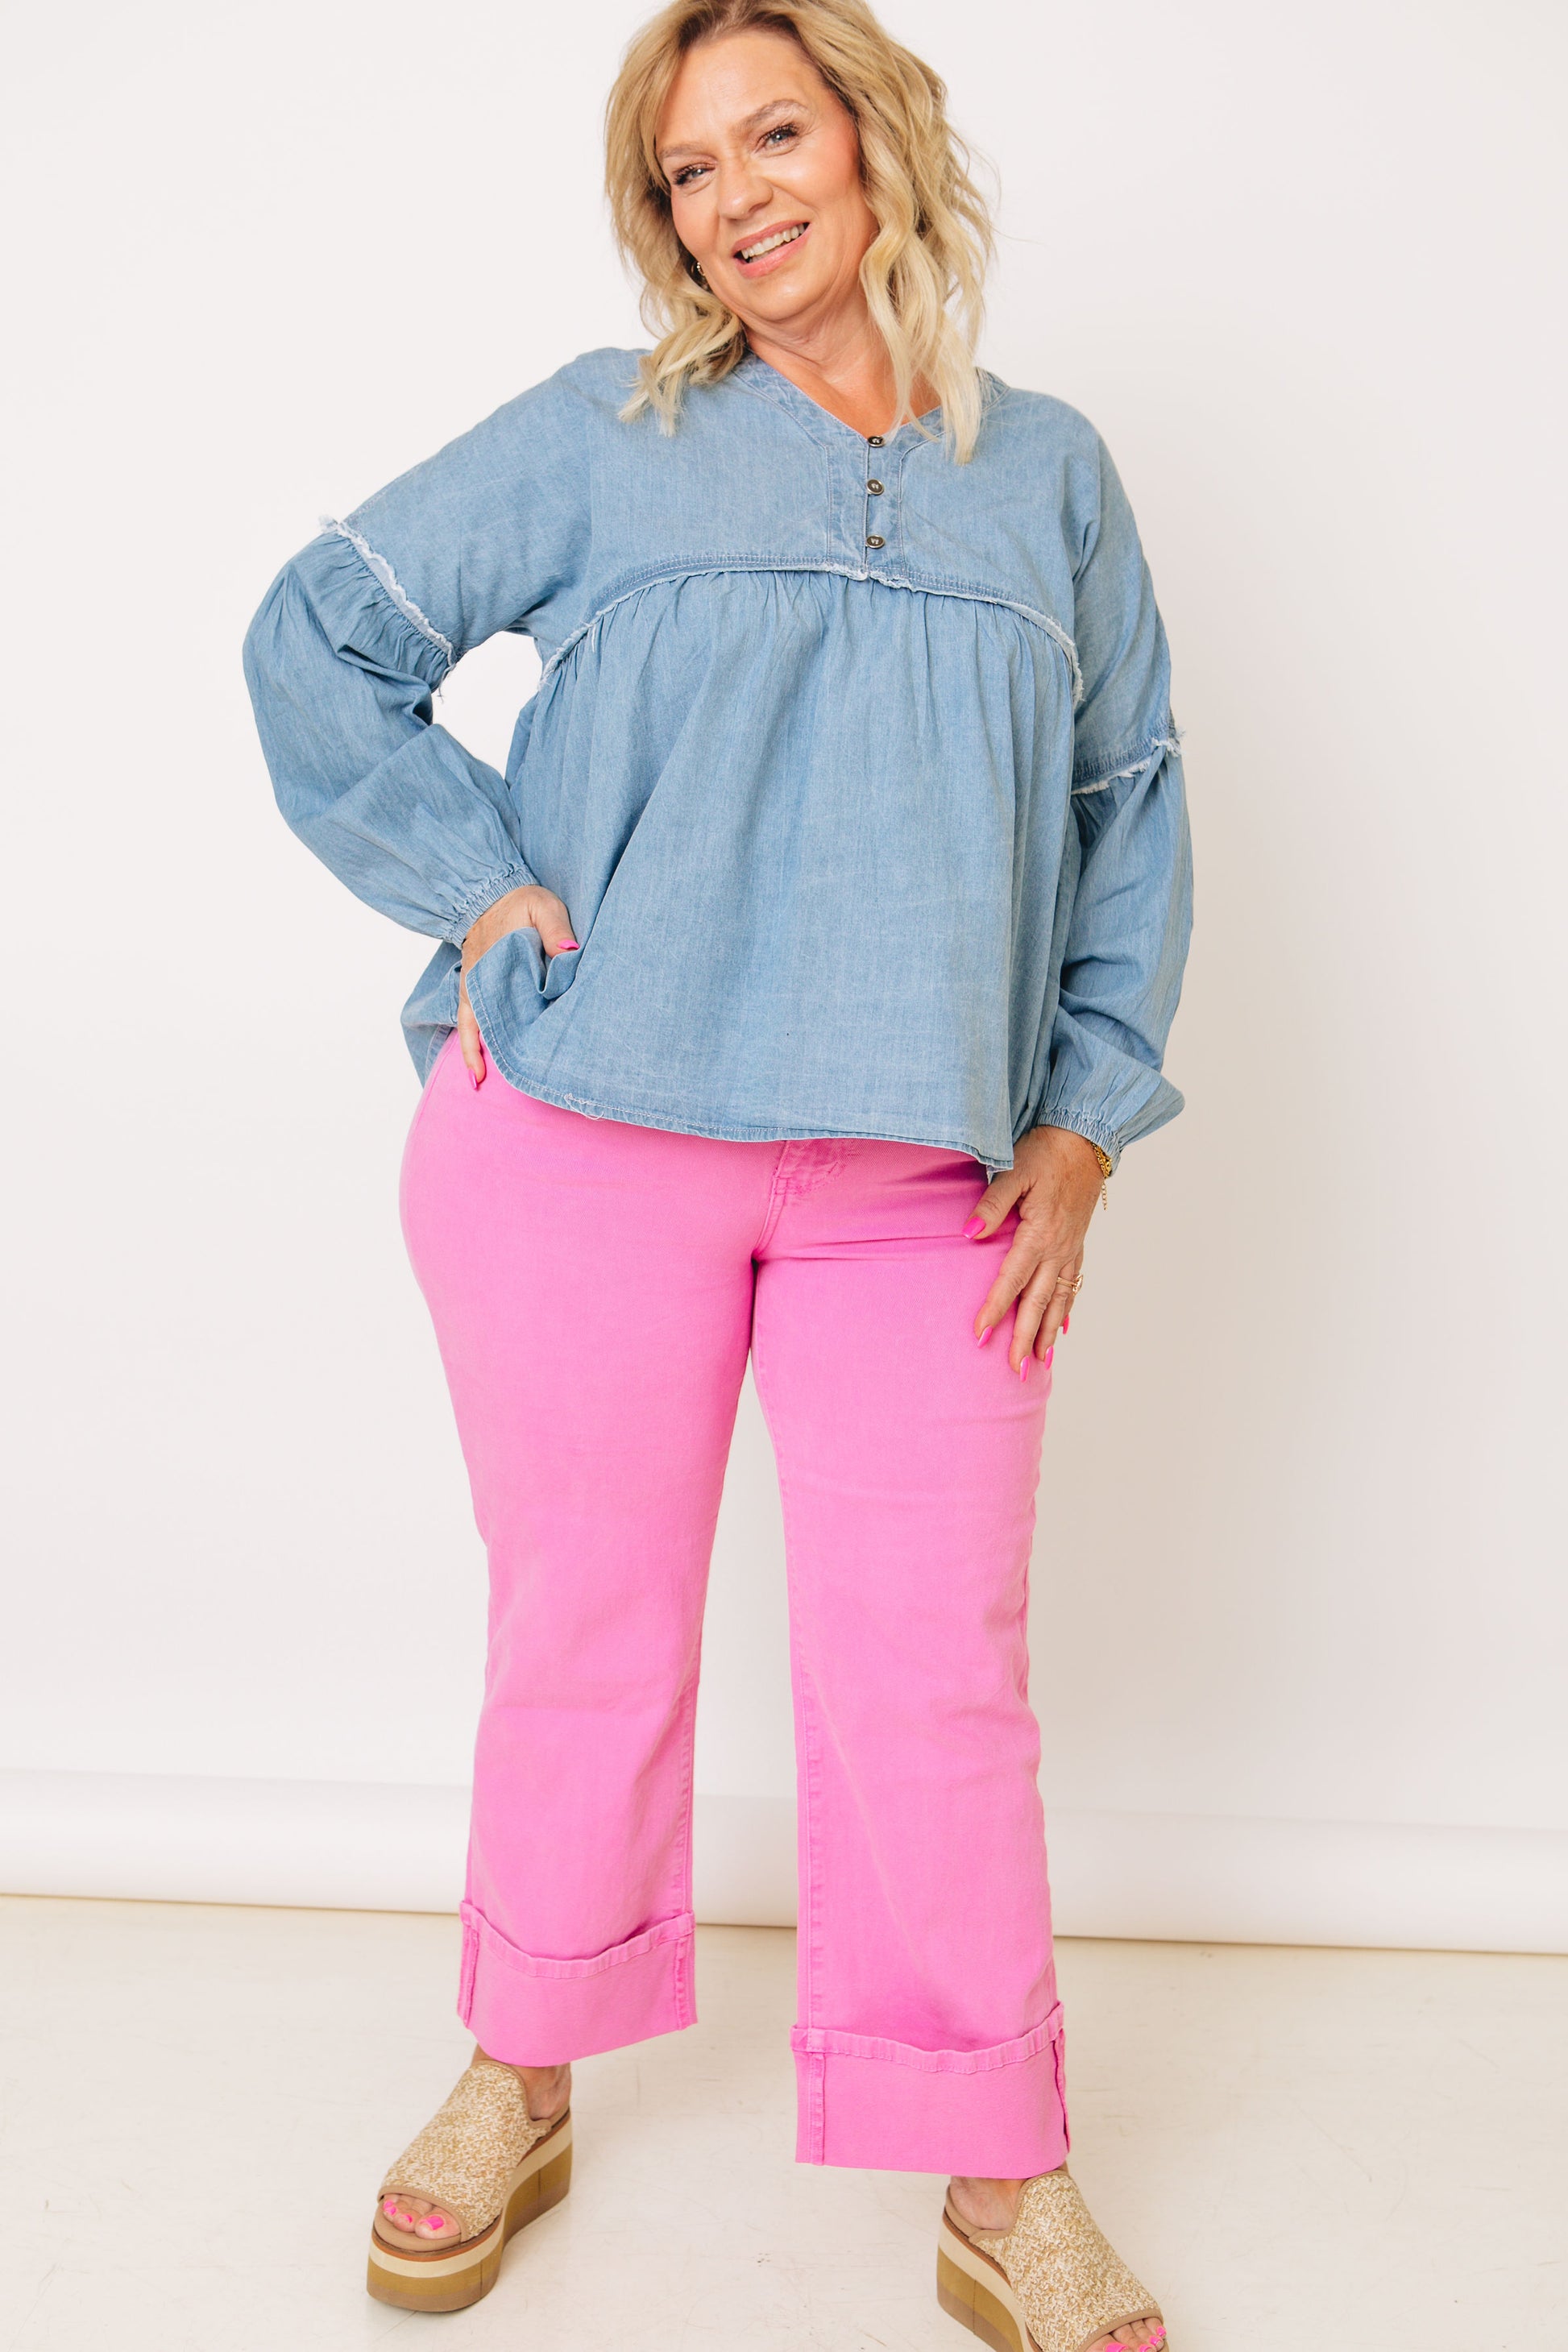 Bubble Gum Pink Textured Pants, Matching Set for Women